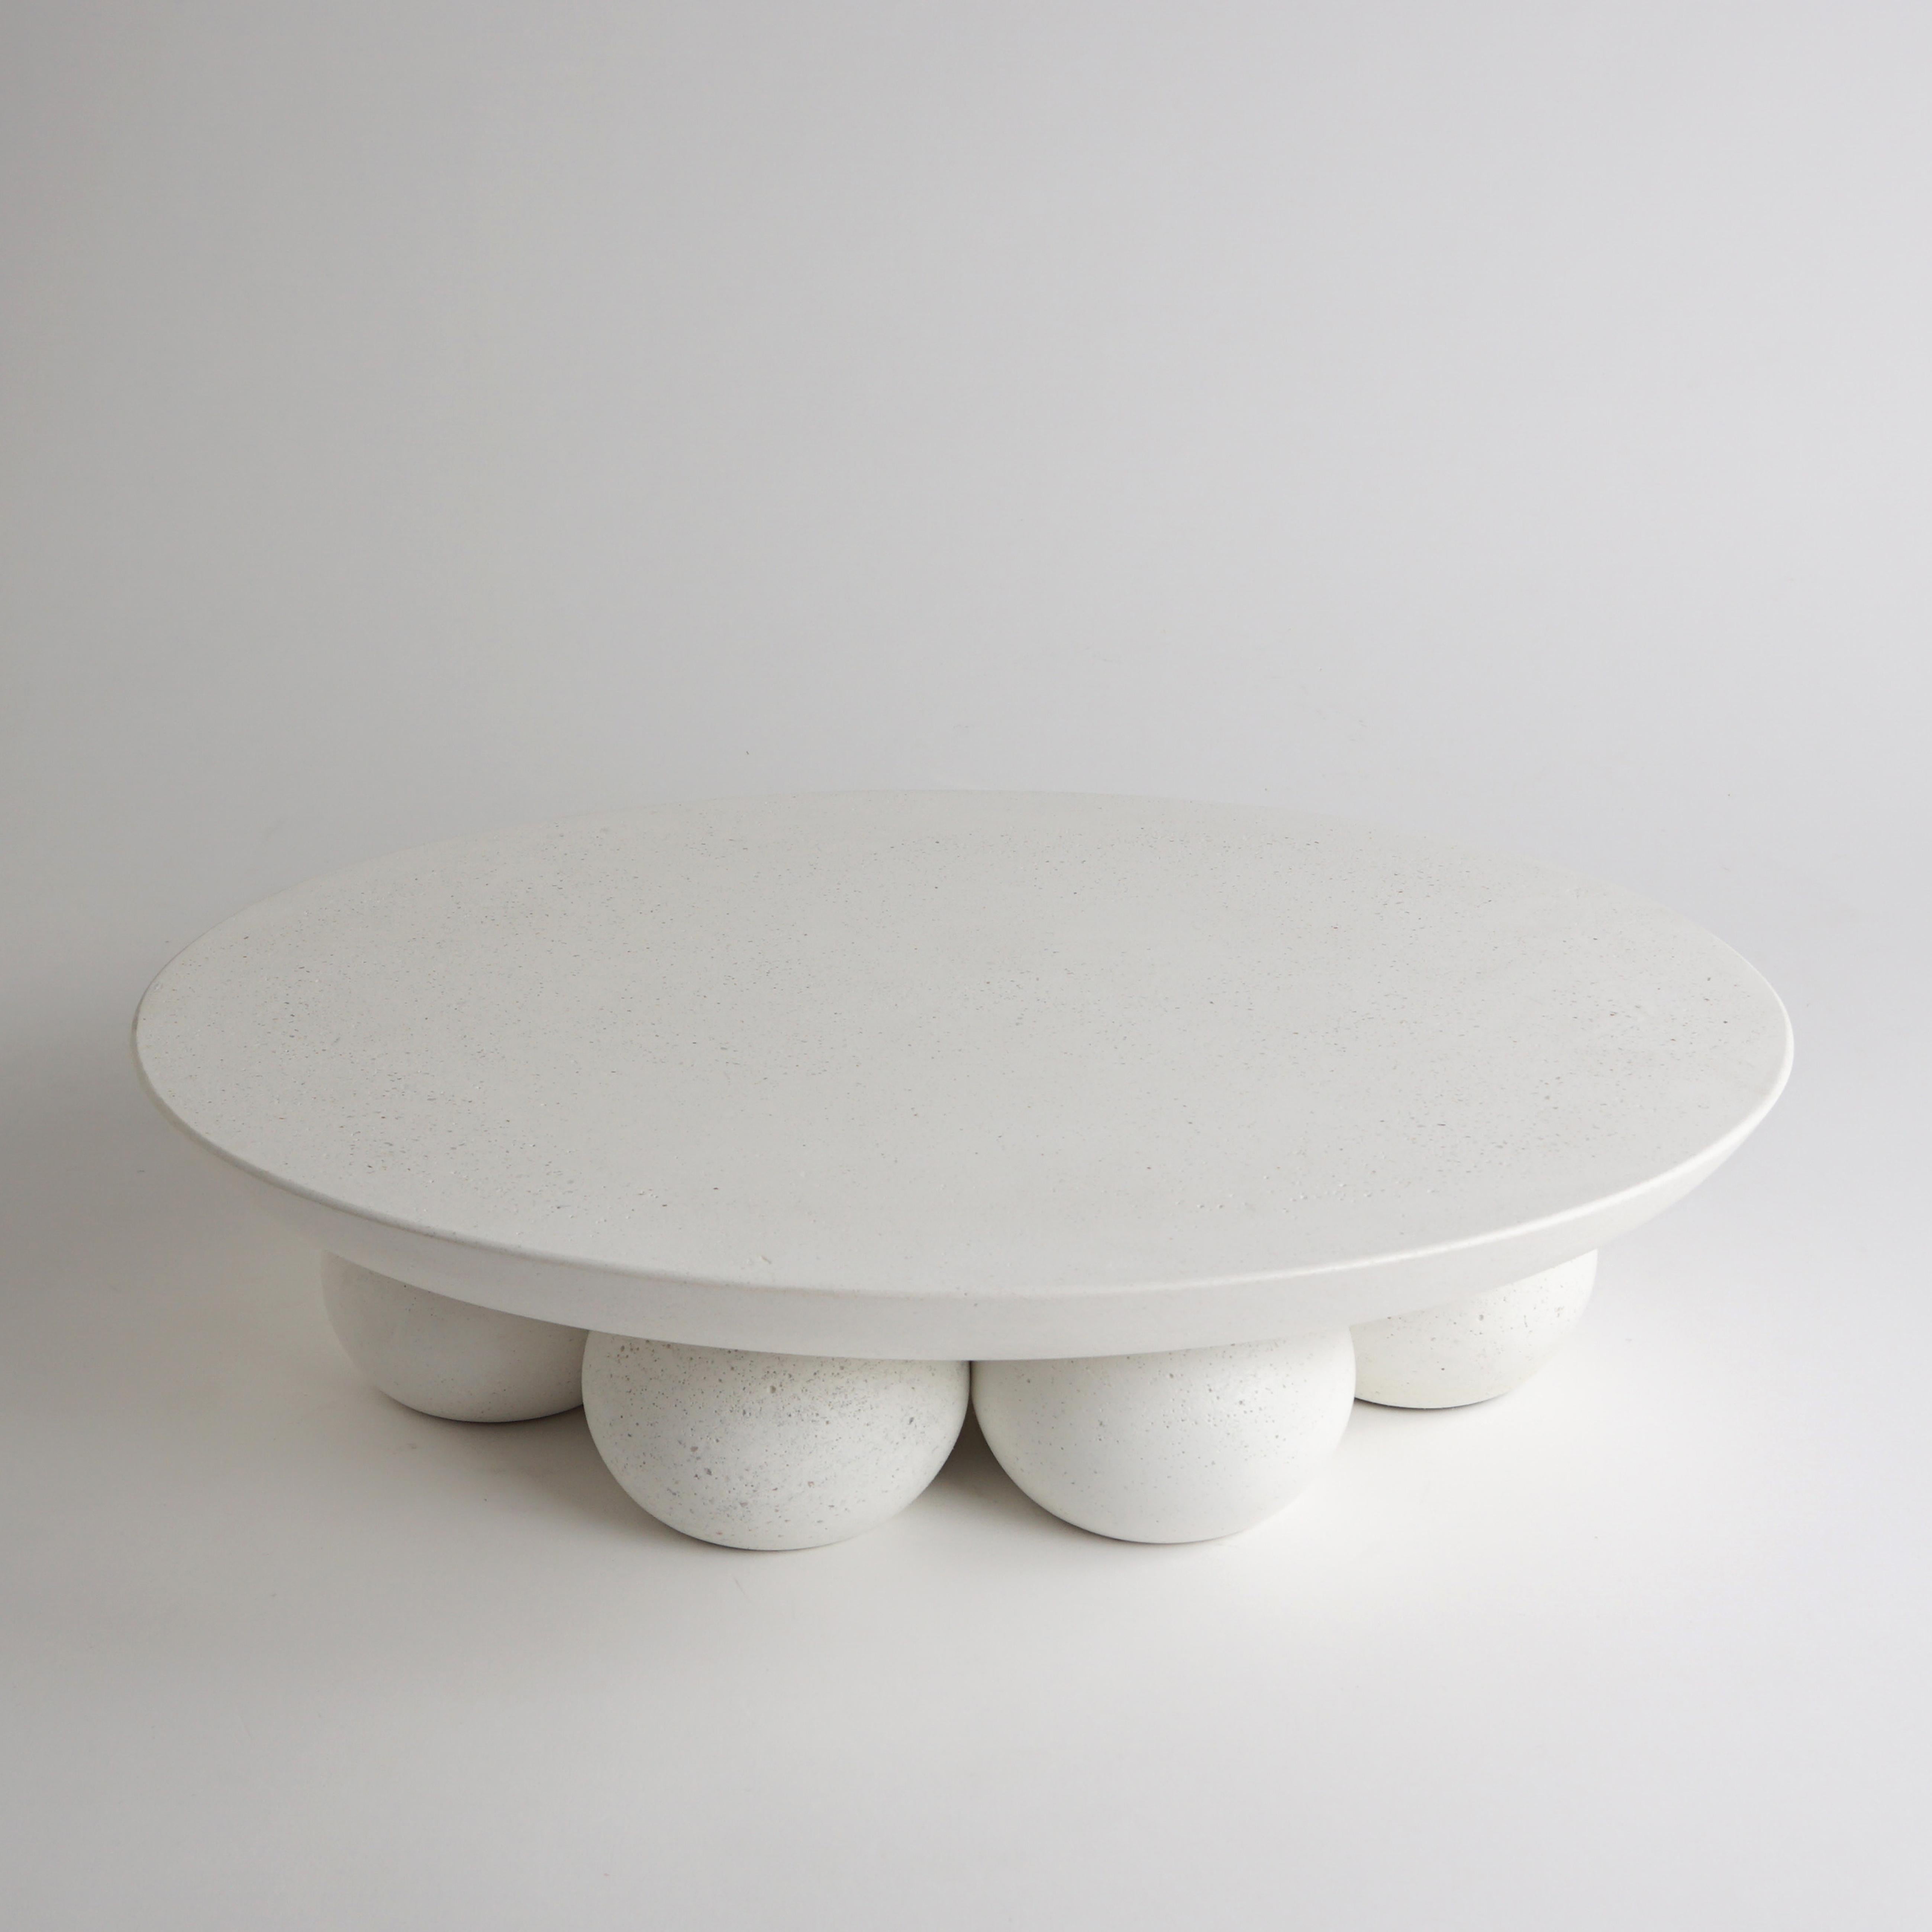 Greek Organic Modern Sculptural Oval Tabletop Centerpiece 'PIEDI' by Alentes Atelier For Sale